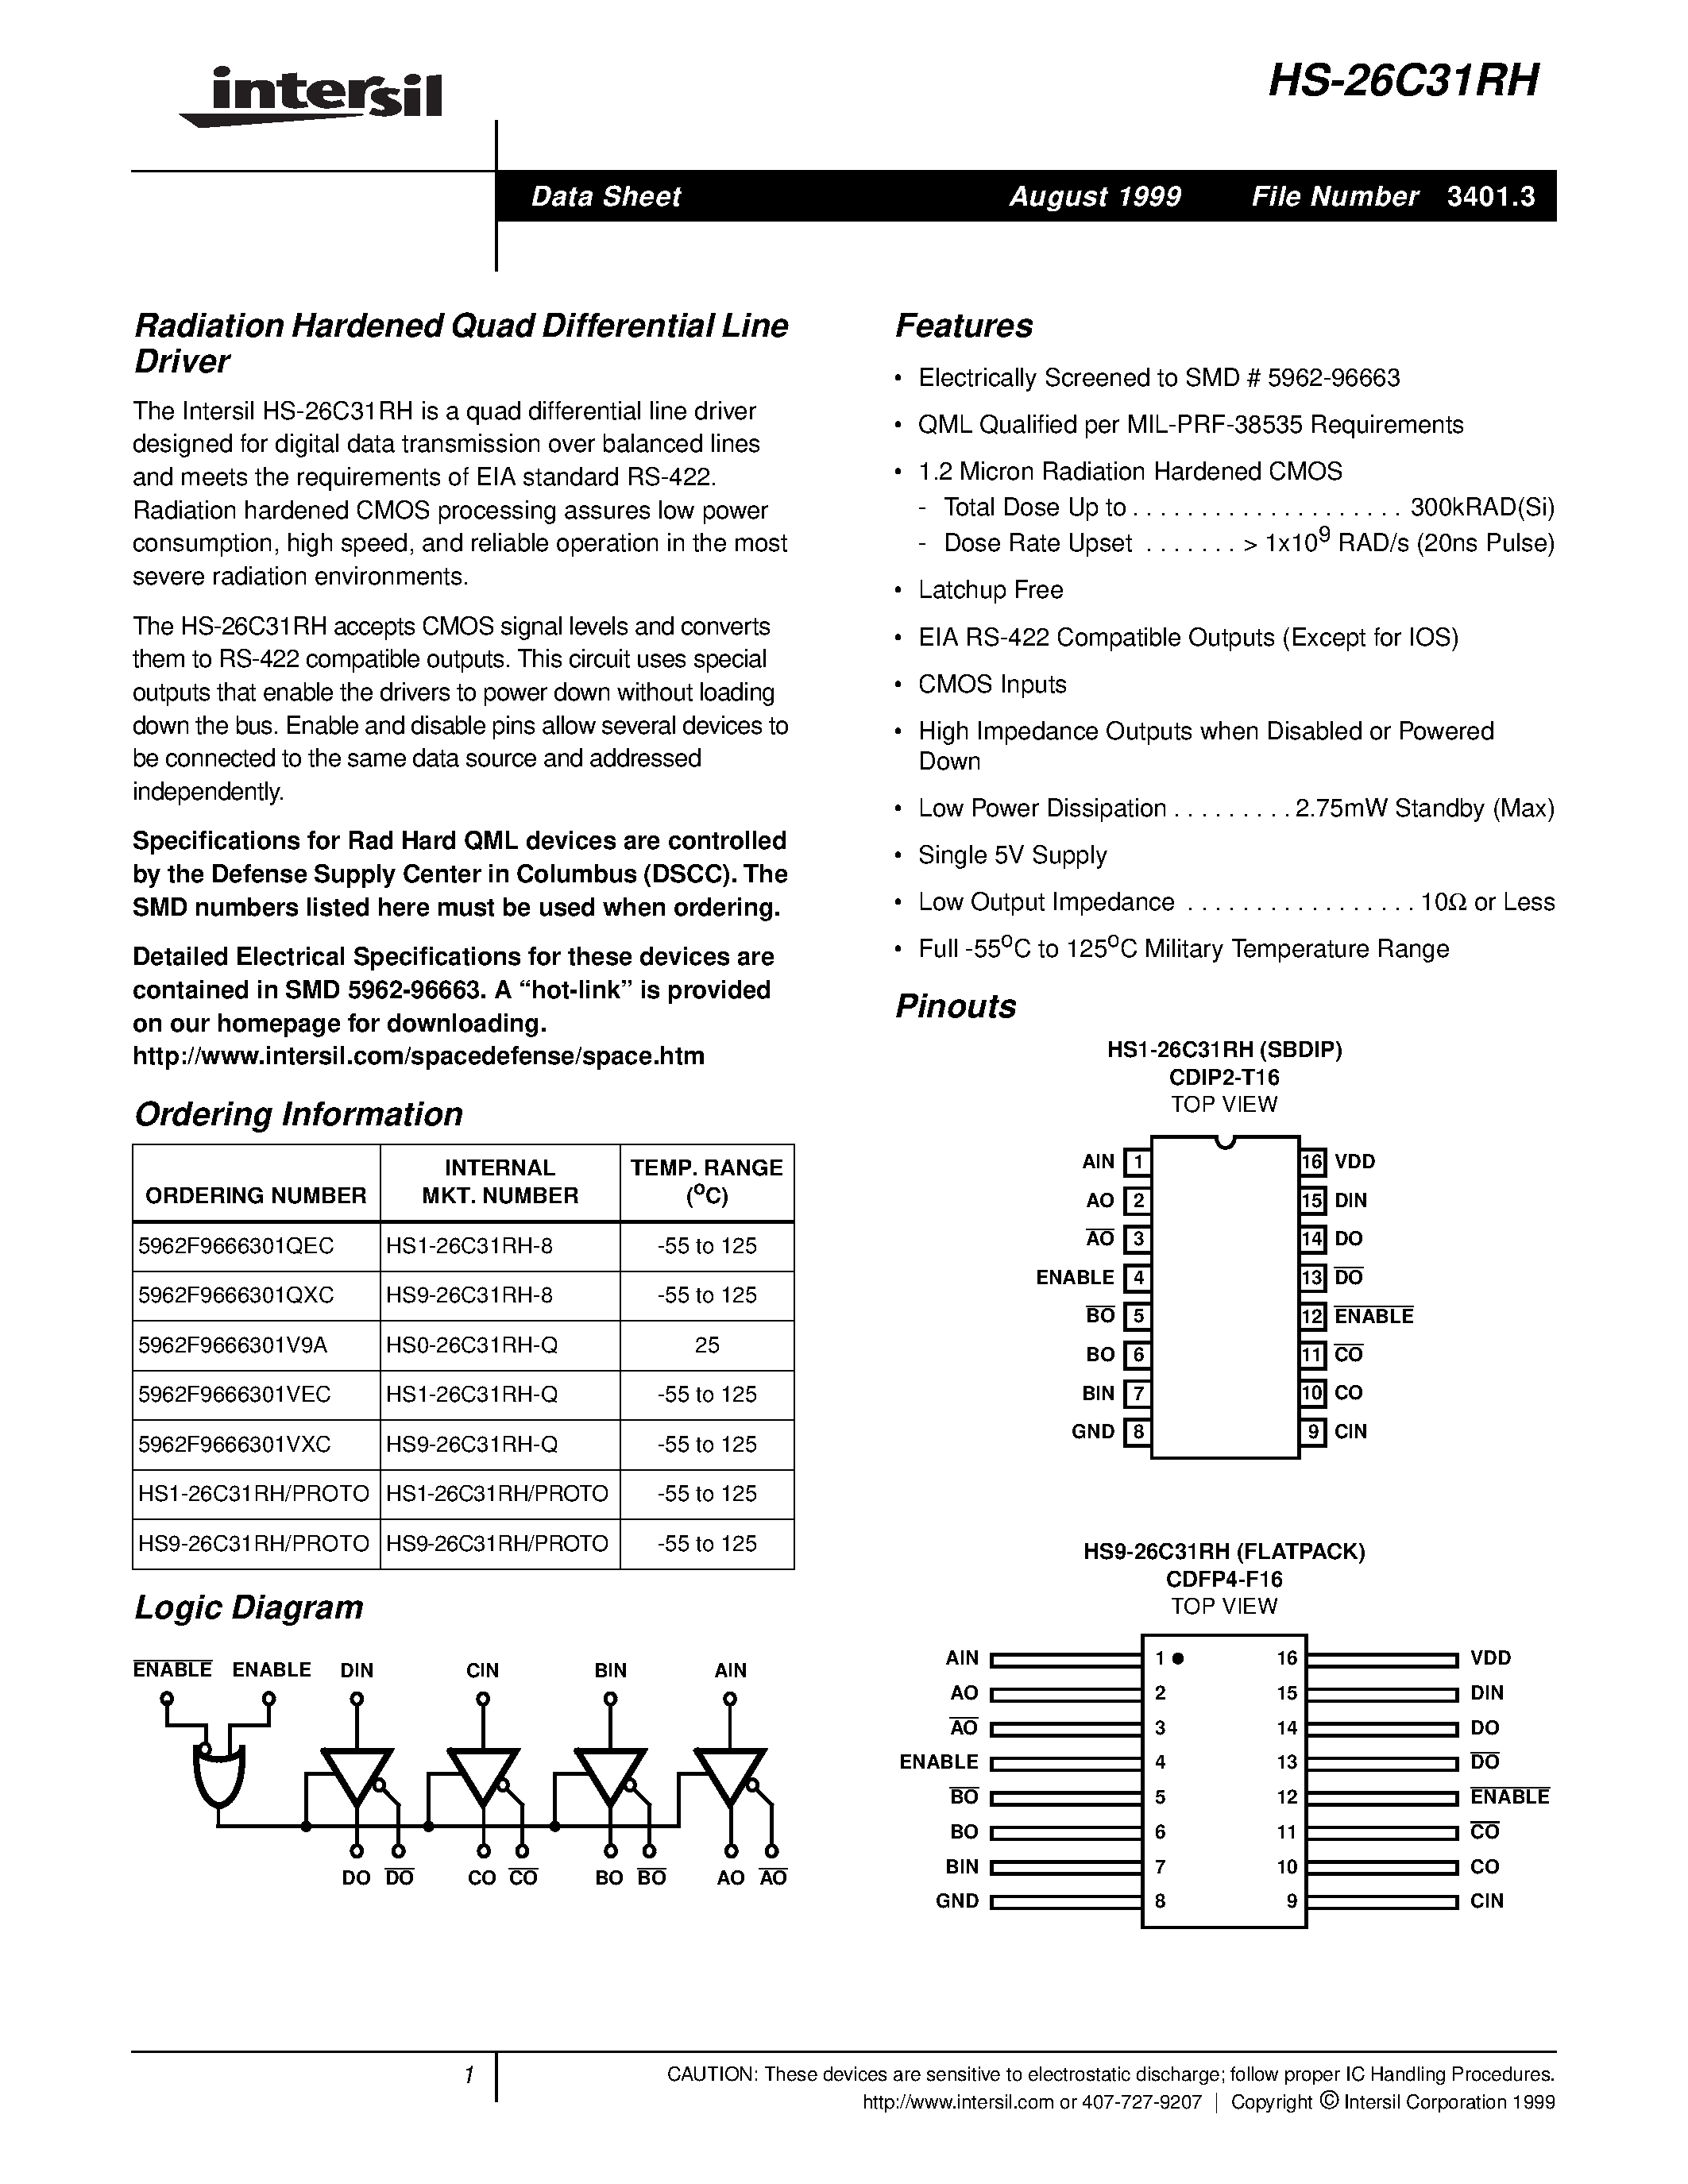 Datasheet HS0-26C31RH-Q - Radiation Hardened Quad Differential Line Driver page 1